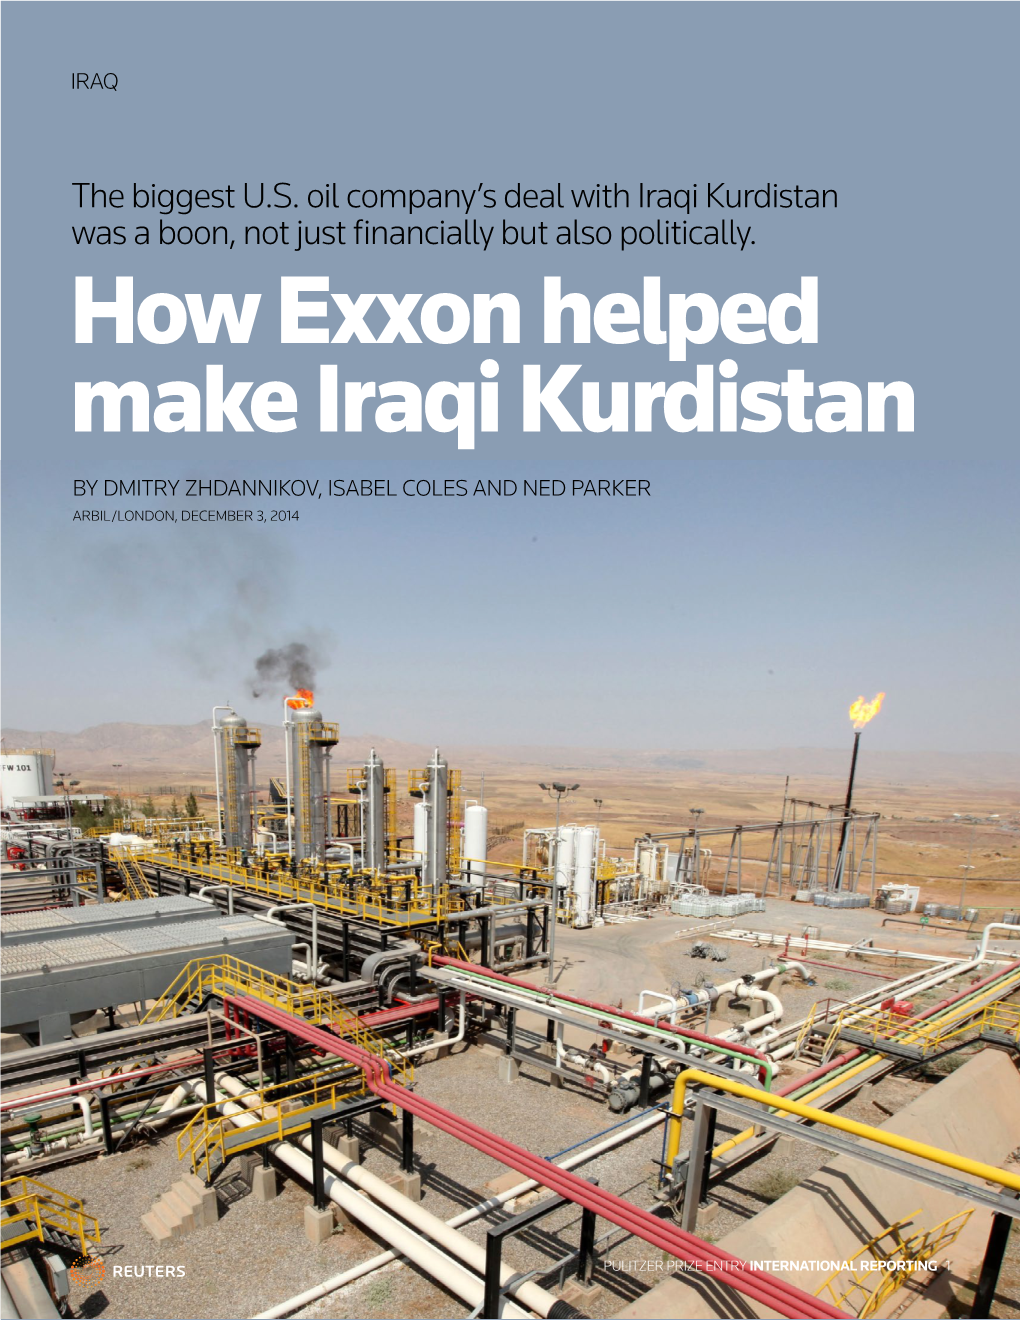 How Exxon Helped Make Iraqi Kurdistan by DMITRY ZHDANNIKOV, ISABEL COLES and NED PARKER ARBIL/LONDON, DECEMBER 3, 2014